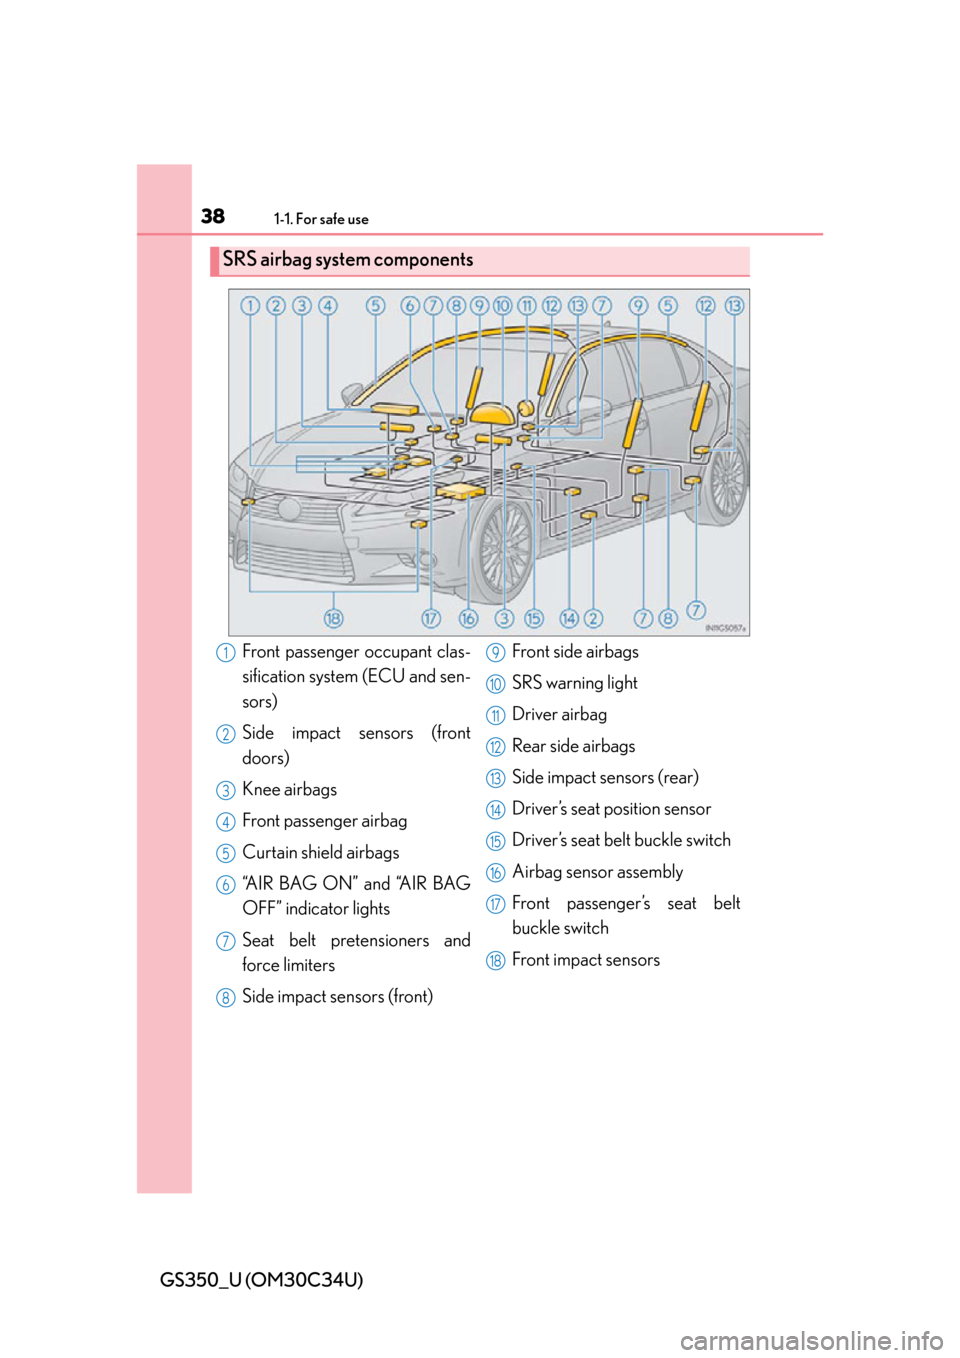 Lexus GS350 2013  Theft deterrent system / LEXUS 2013 GS350 OWNERS MANUAL (OM30C34U) 381-1. For safe use
GS350_U (OM30C34U)
SRS airbag system components
Front passenger occupant clas-
sification system (ECU and sen-
sors)
Side impact sensors (front
doors)
Knee airbags
Front passenger 